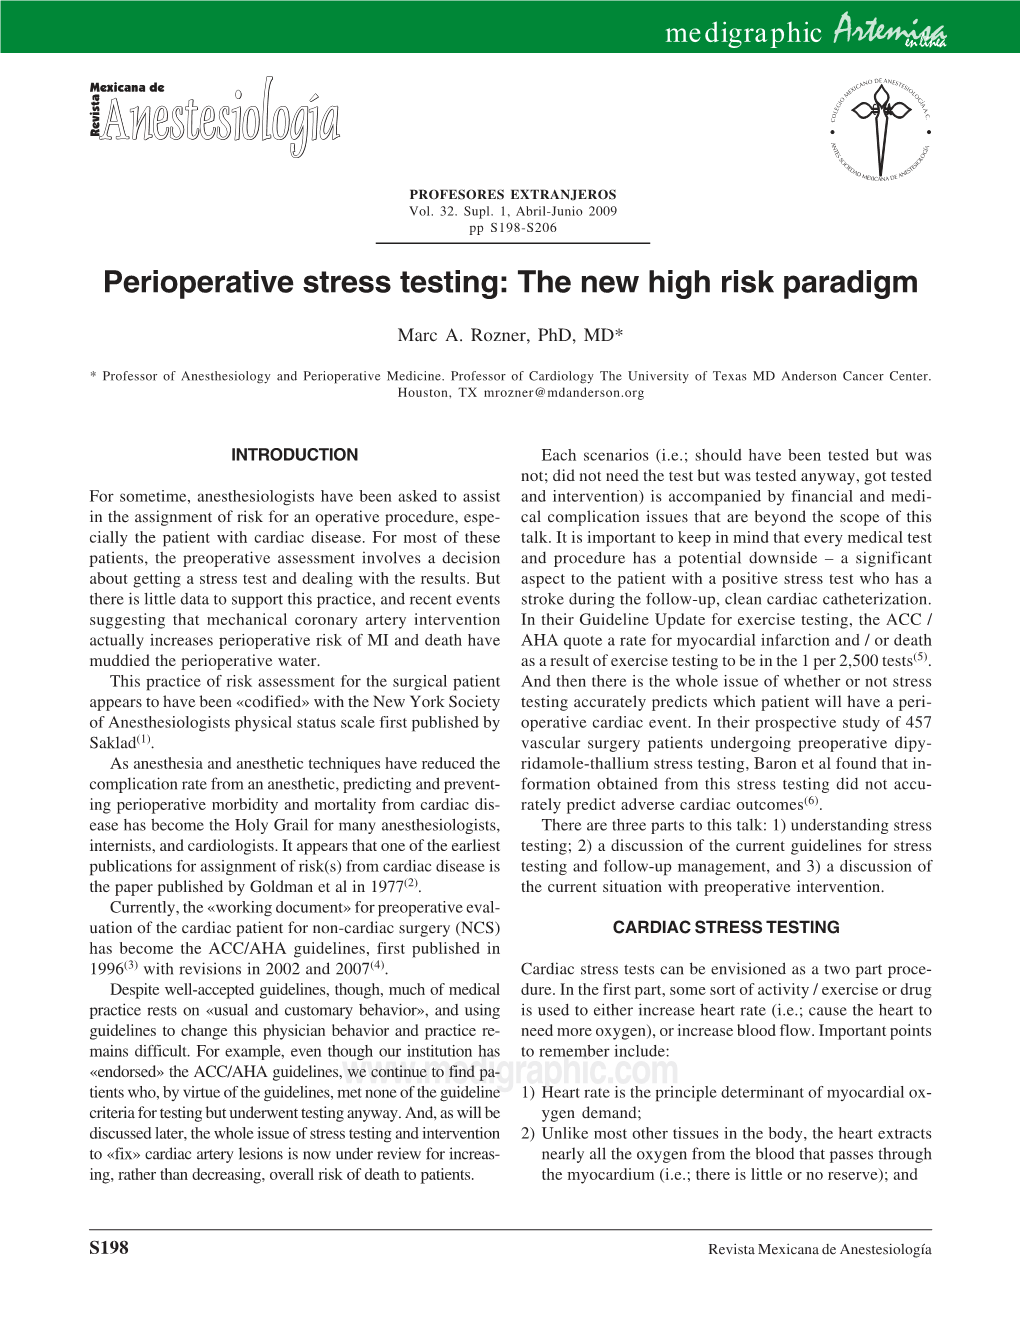 Perioperative Stress Testing: the New High Risk Paradigm